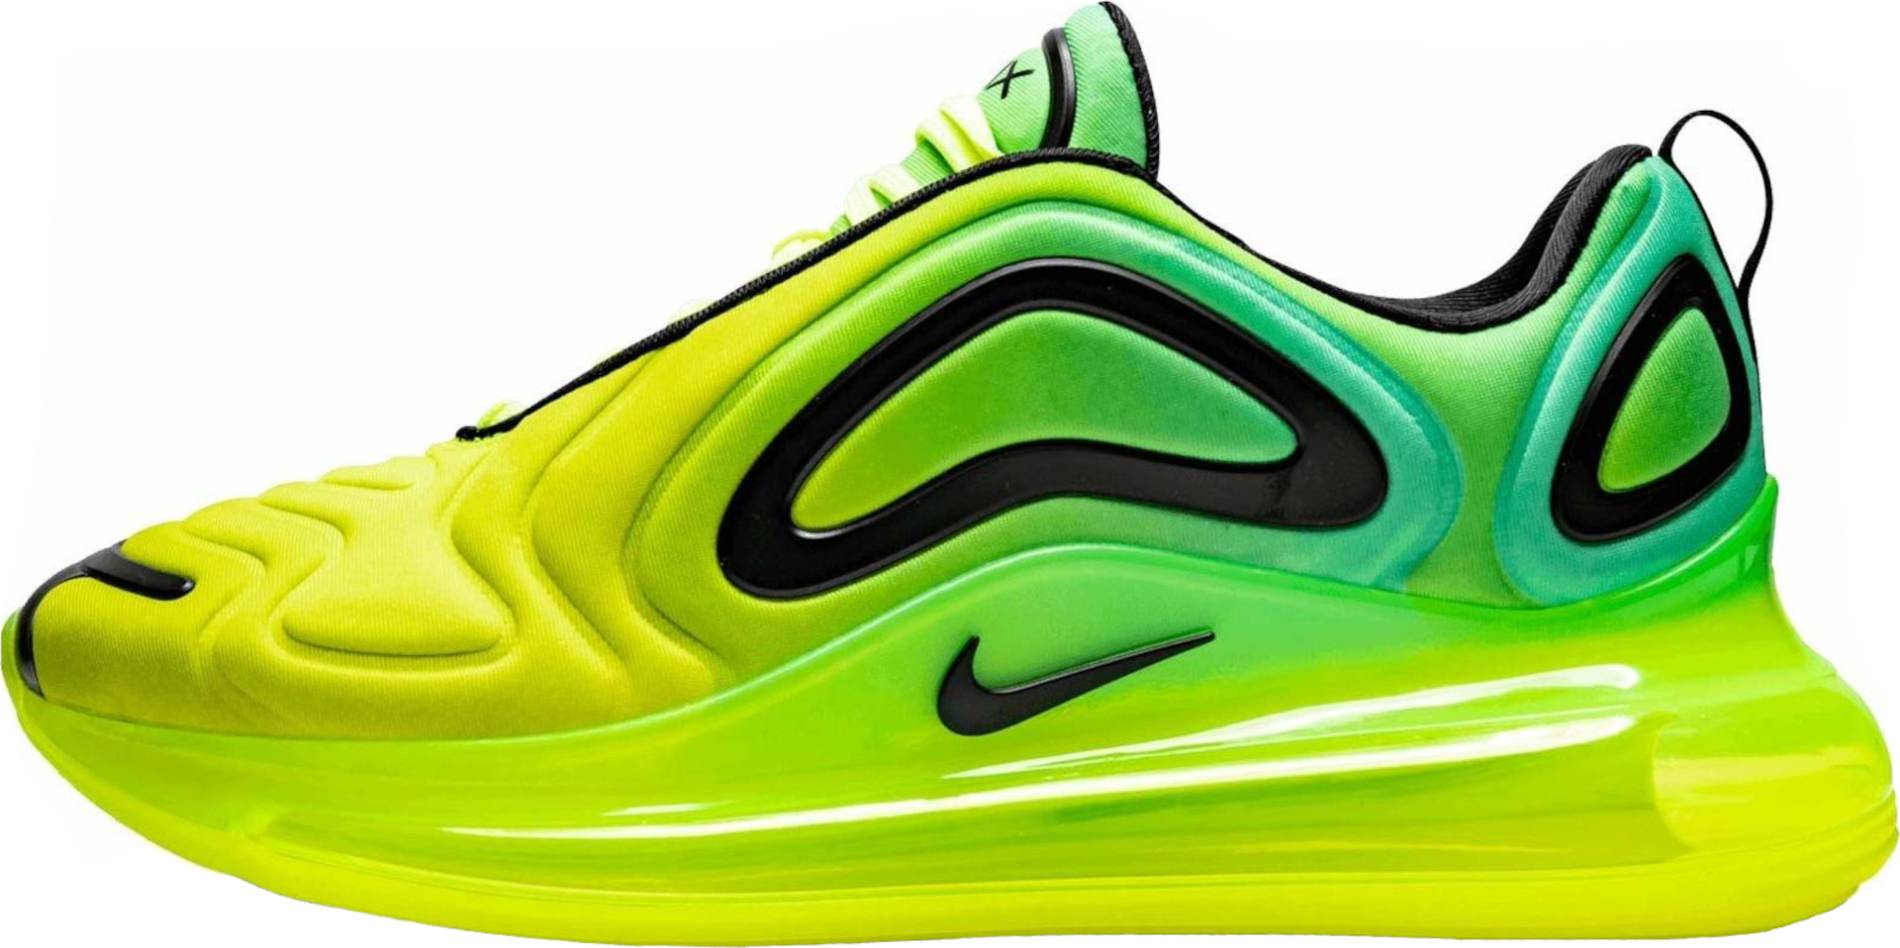 sneakers green